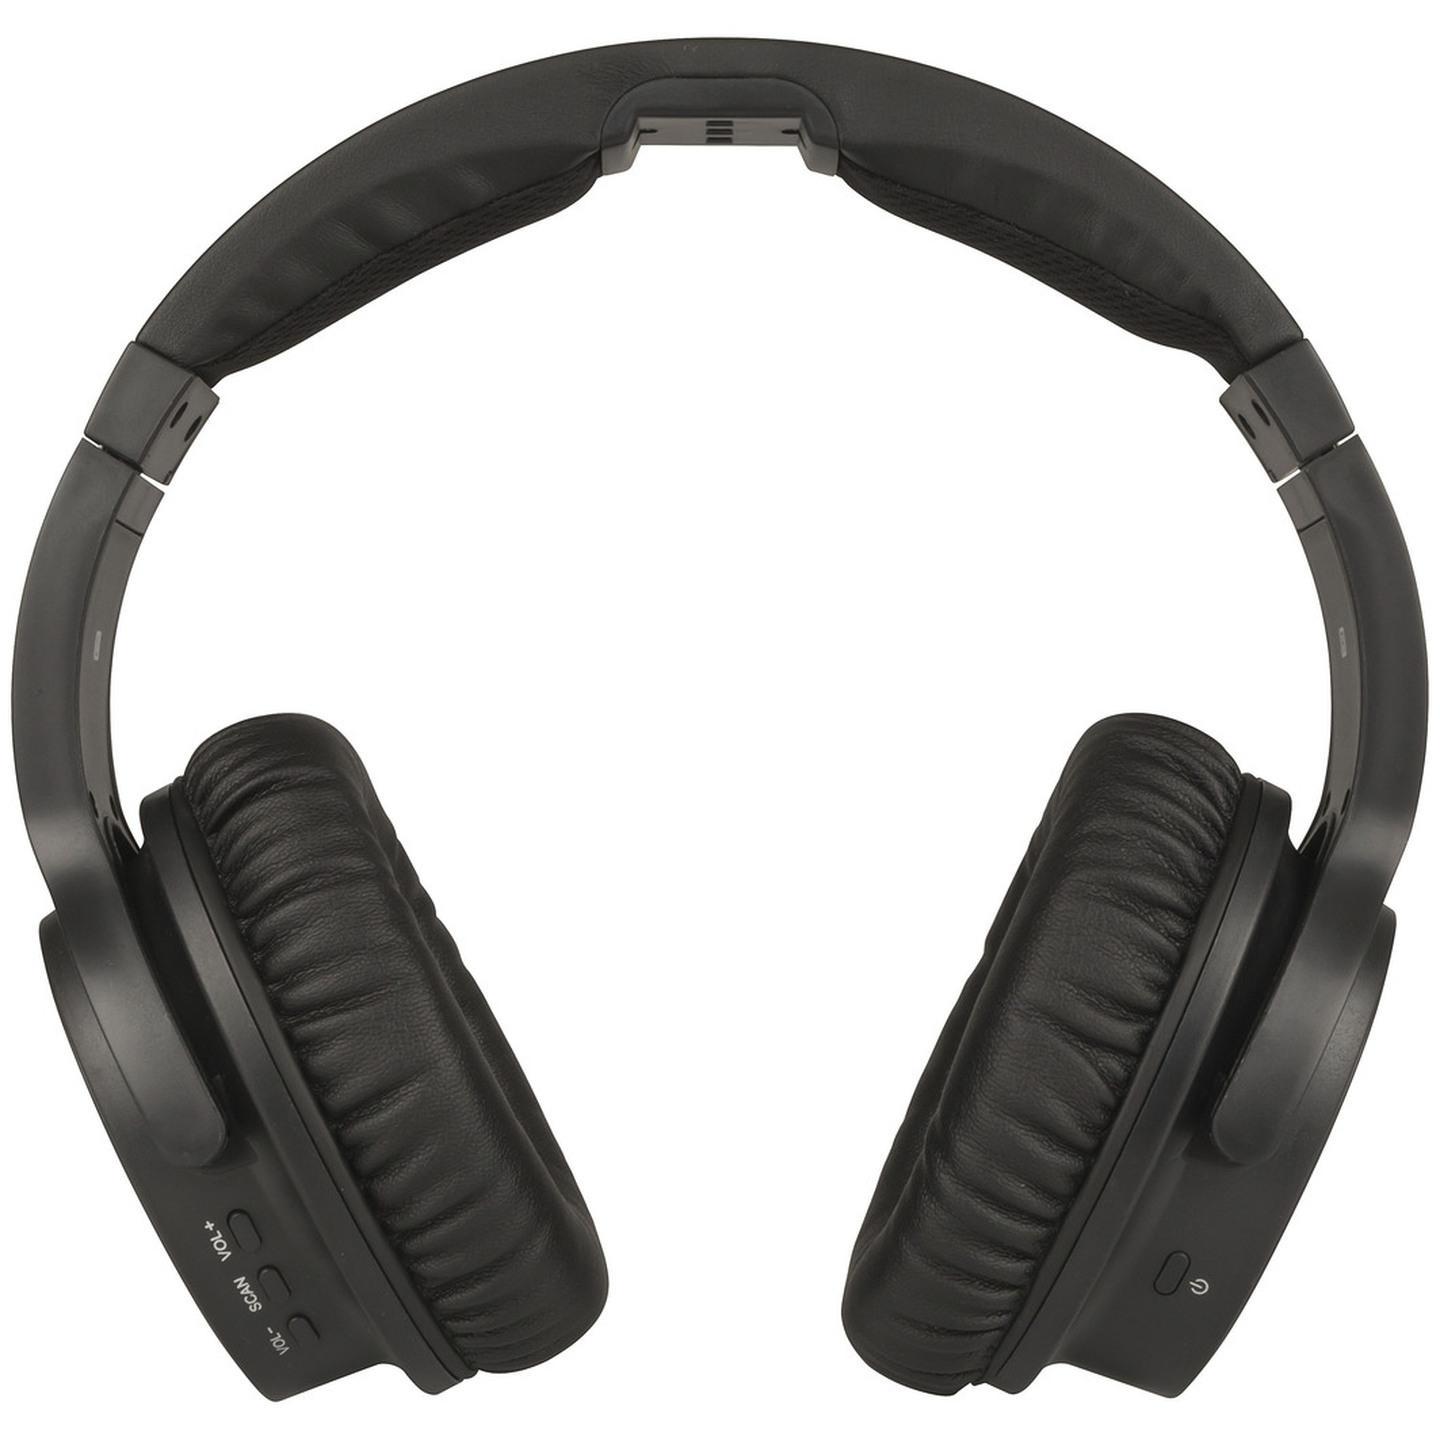 Digitech Spare 2.4GHz Wireless Headphones to suit AA2036